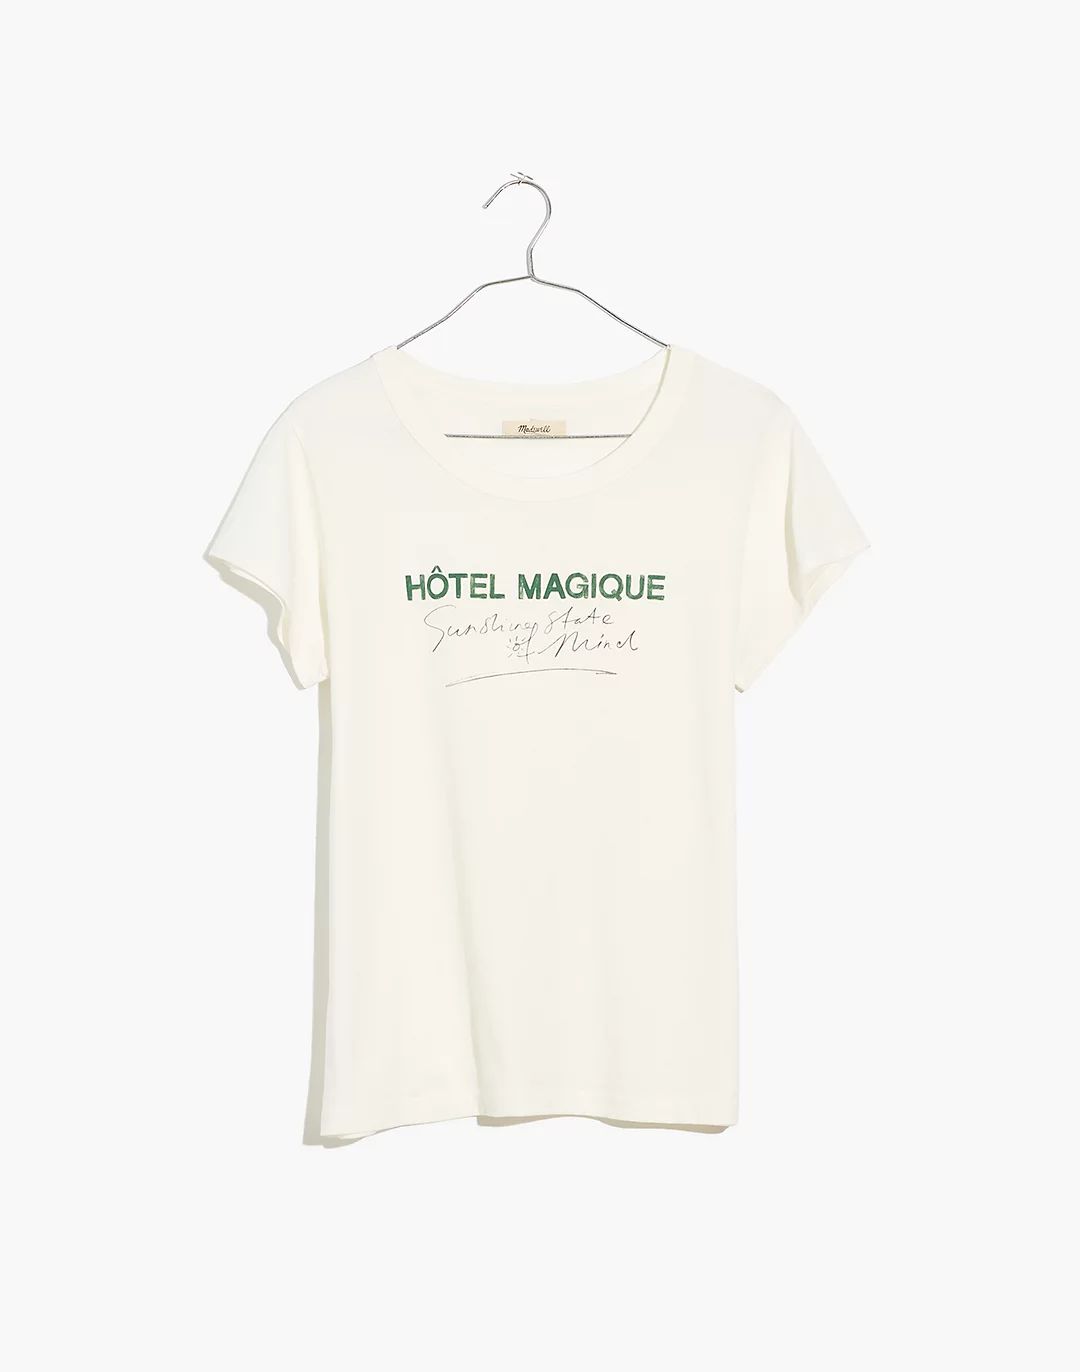 Madewell x Hôtel Magique Sunshine State of Mind Perfect Vintage Tee | Madewell